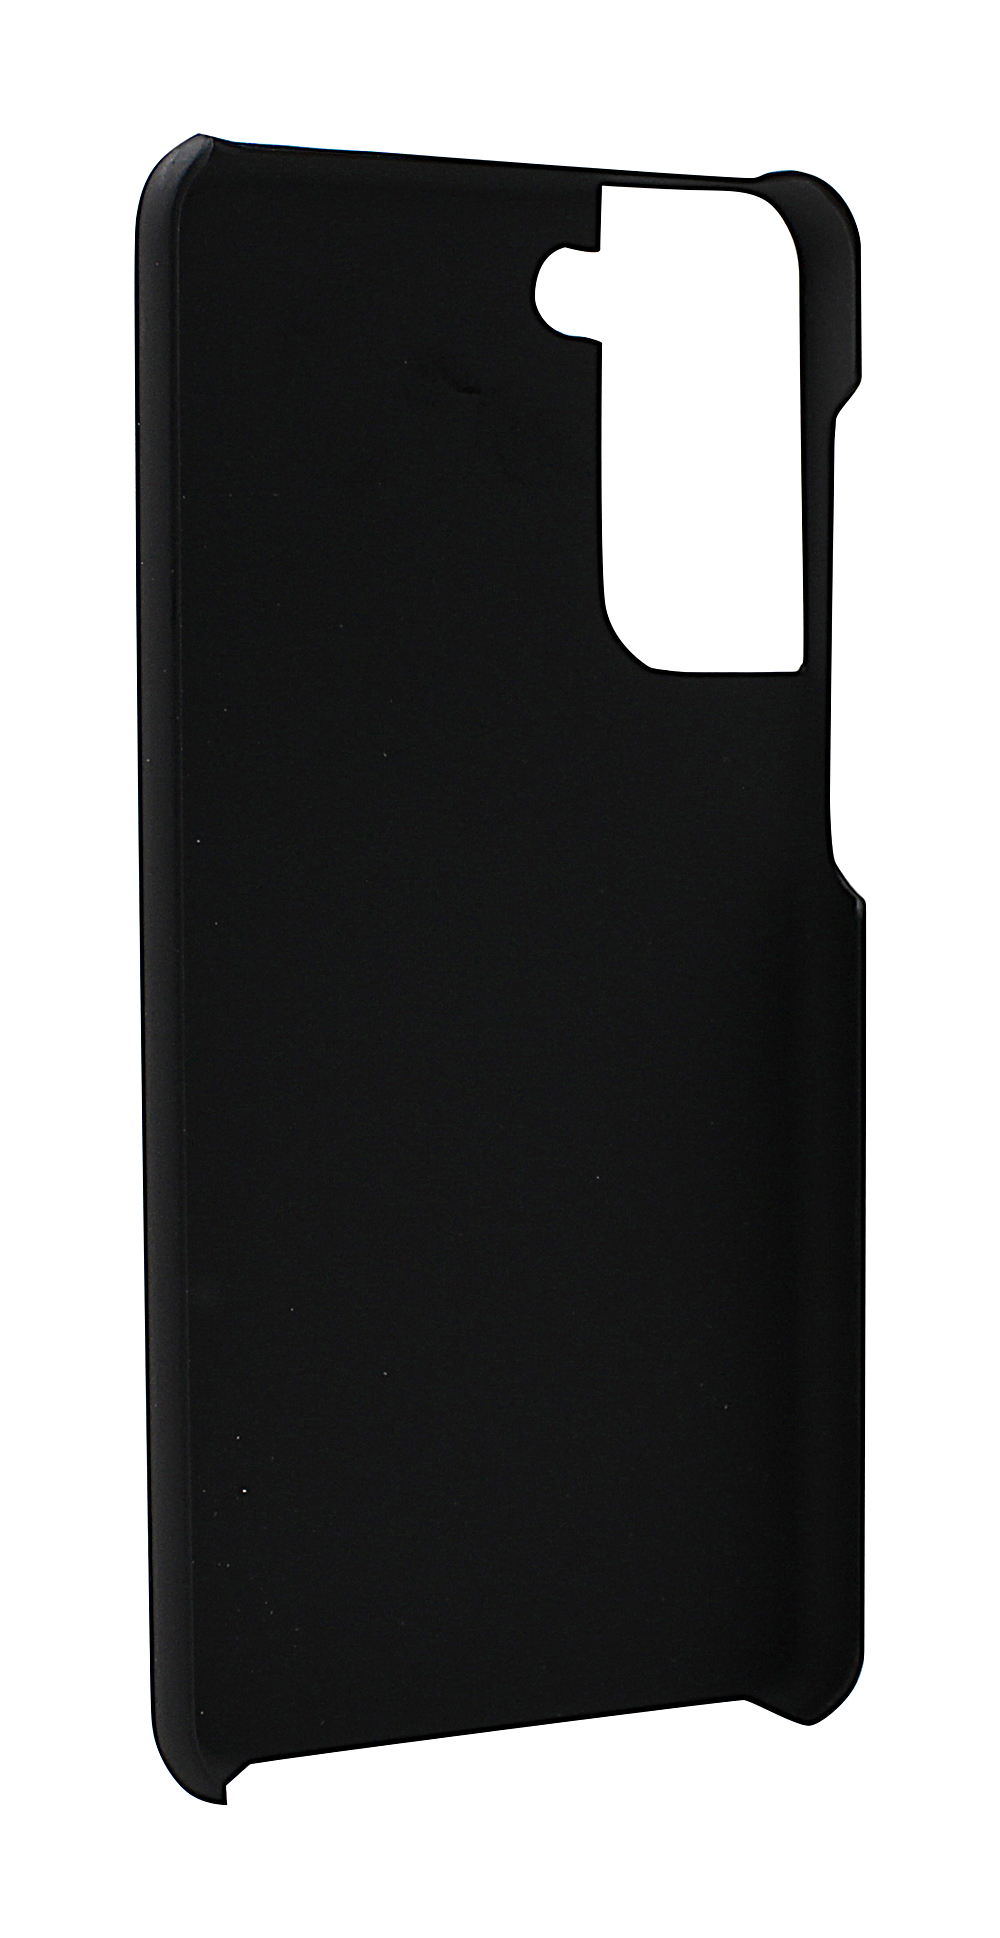 CoverIn Skimblocker XL Magnet Wallet Samsung Galaxy S21 5G (G991B)